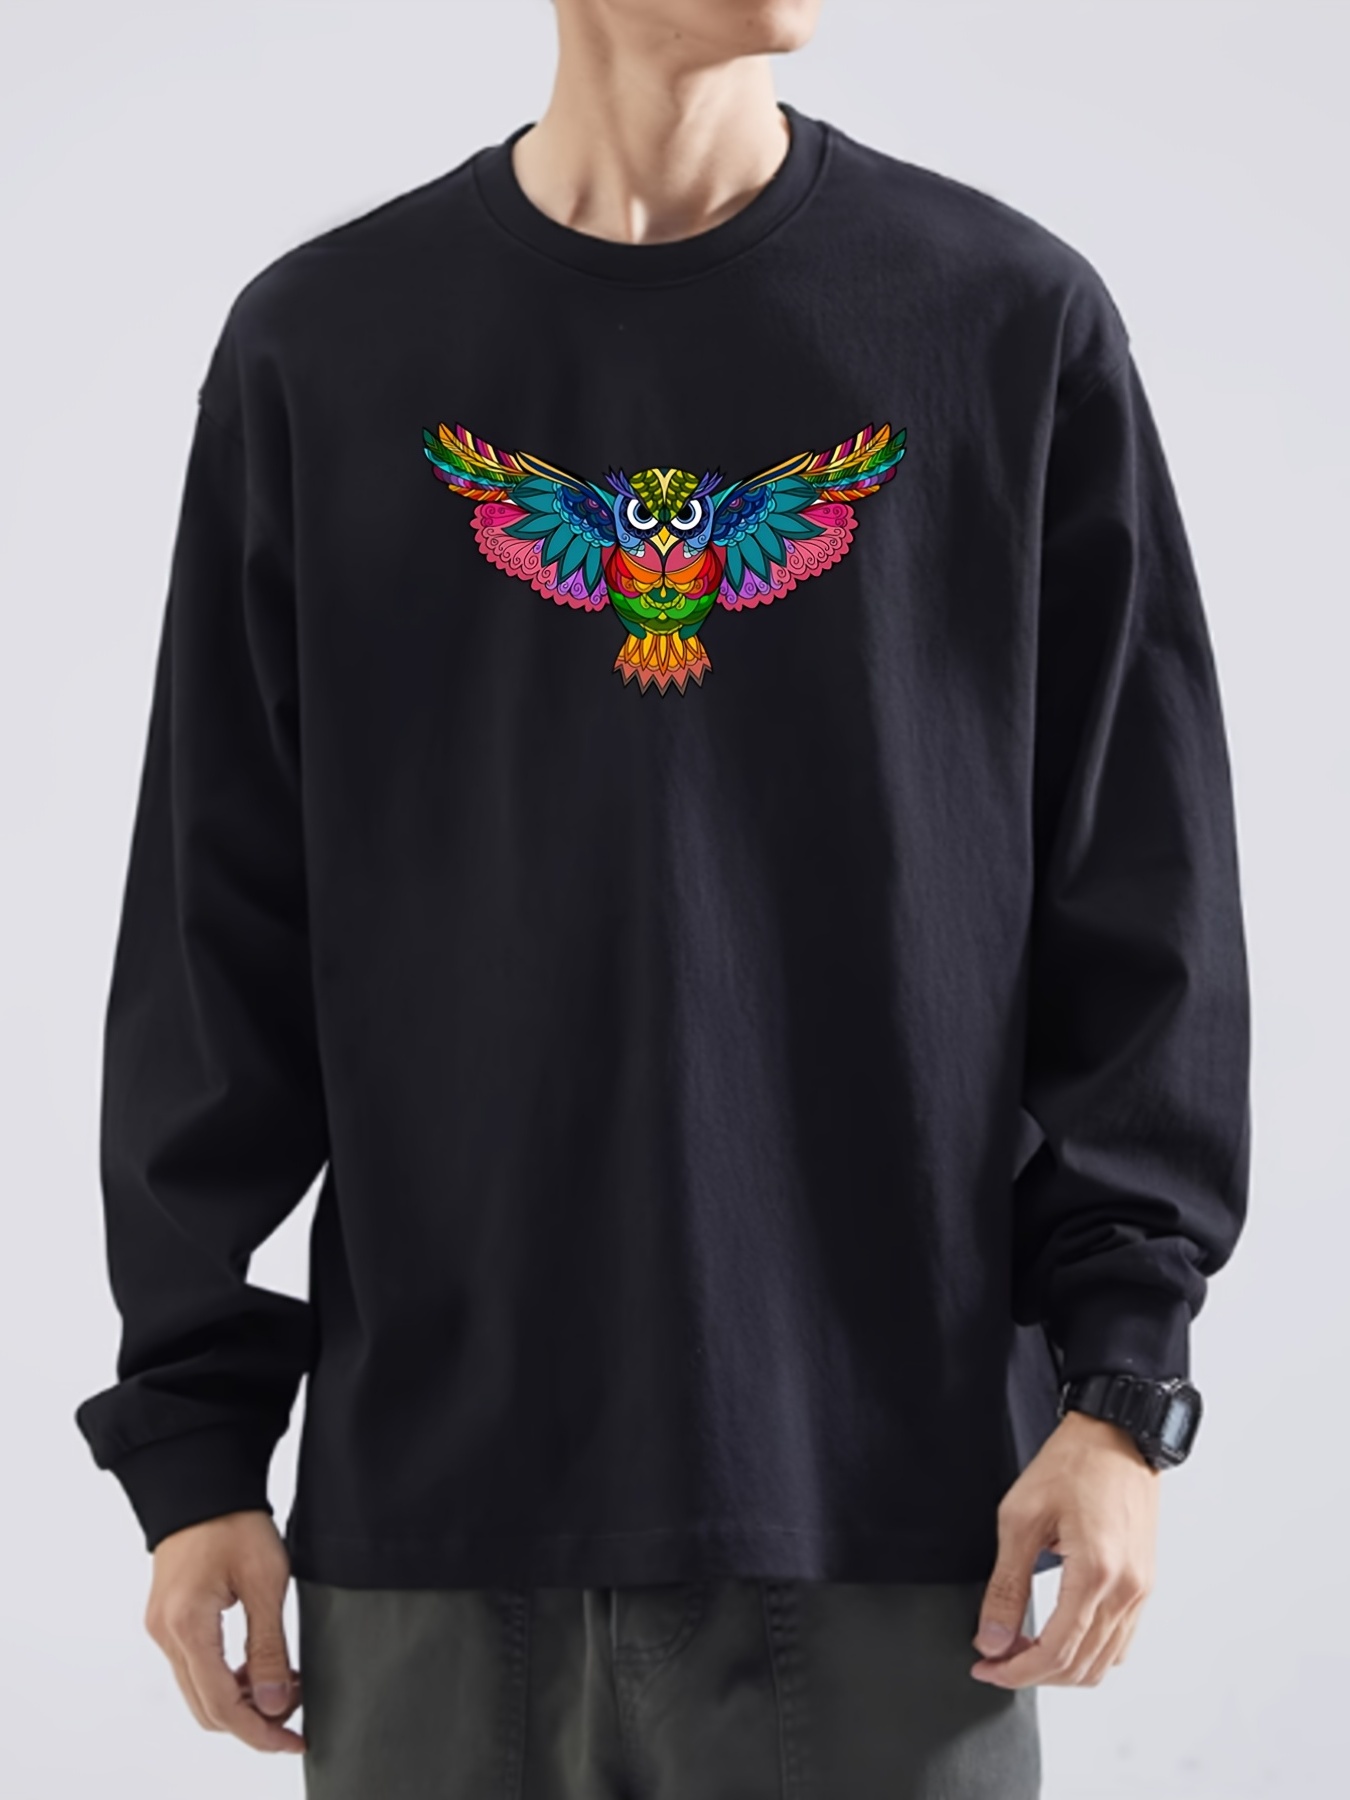 Owl T-shirt Owl Gift Animal Shirt Bird Shirt Bird Print 